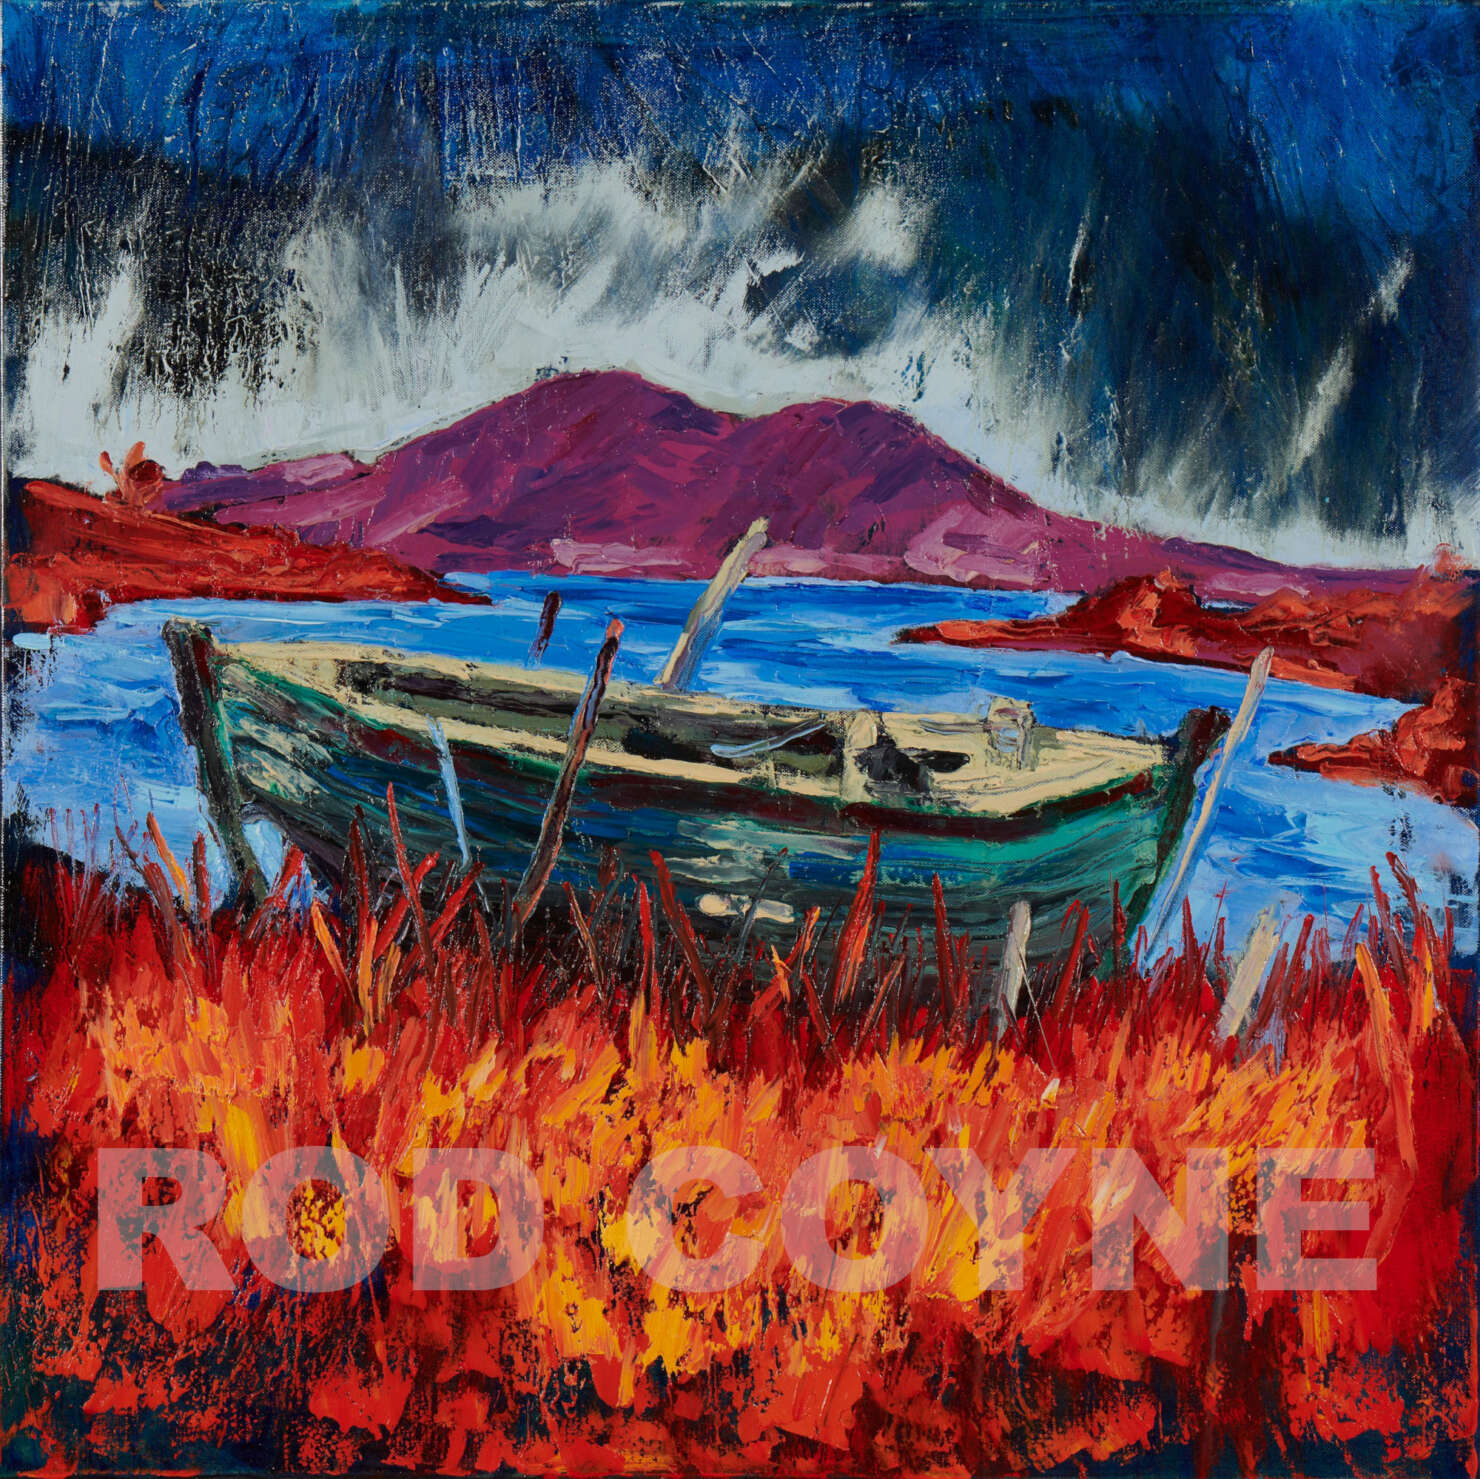 artist rod coyne's landscape "Shipwrecked Heart" is shown here, watermarked.